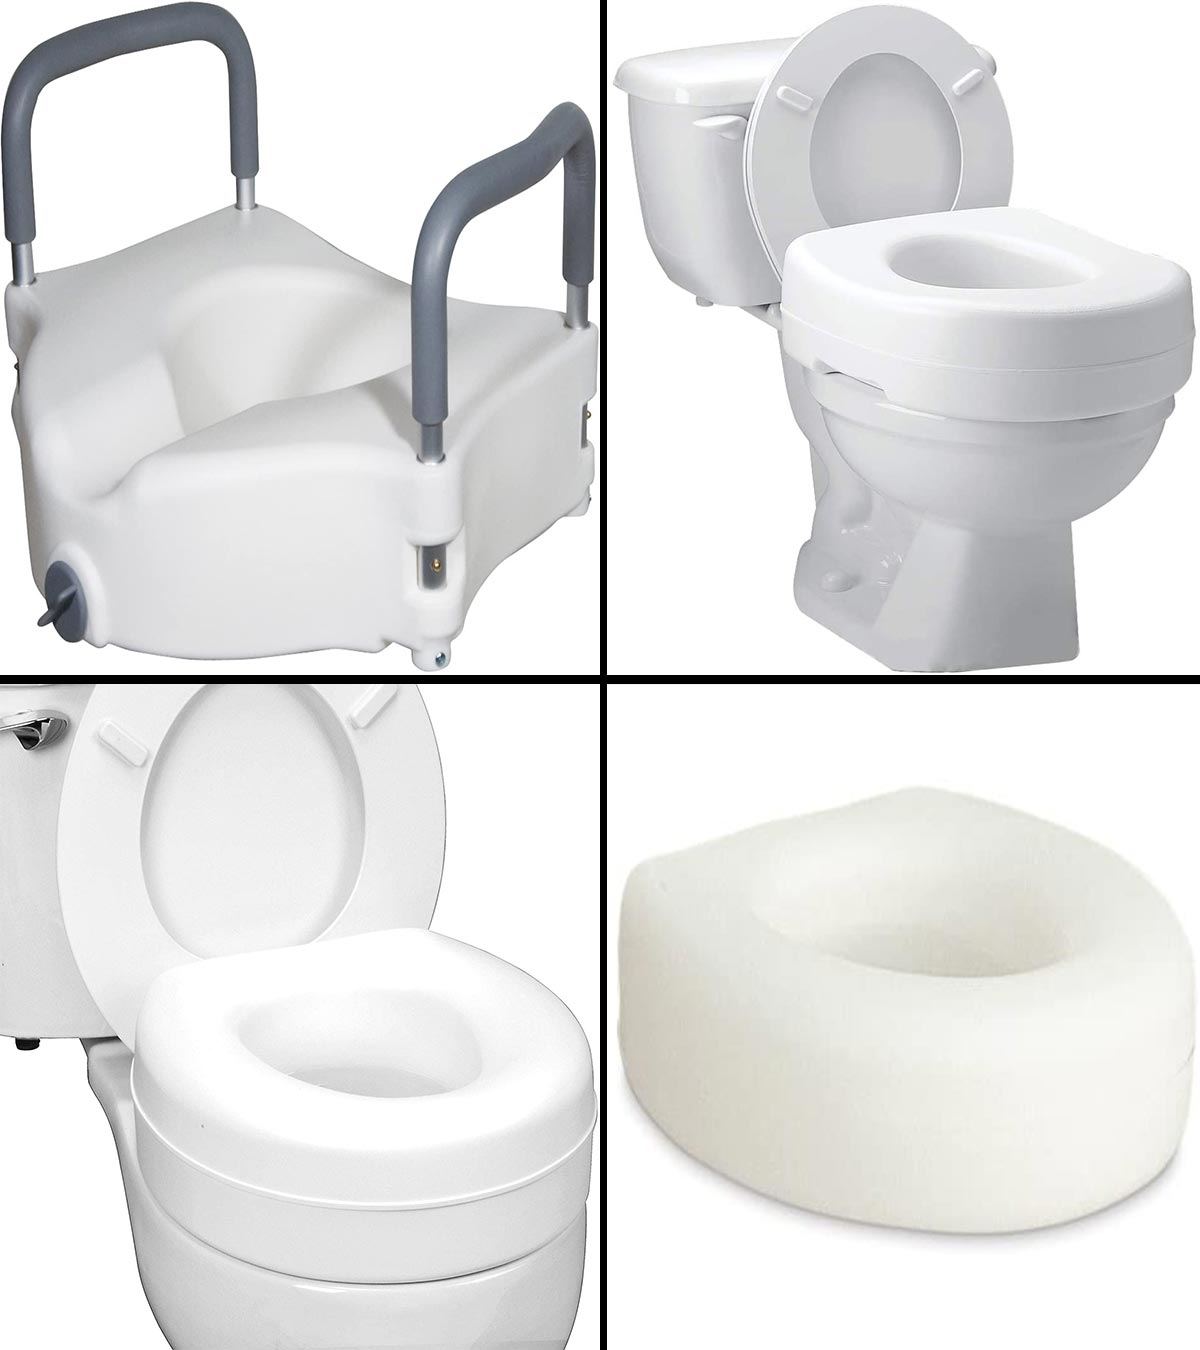 USA_Best_Seller 5 Portable Elevated Raised Toilet Seat for Elderly Disabled White Lightweight Handicap Lightweight Heavy Duty Convenient